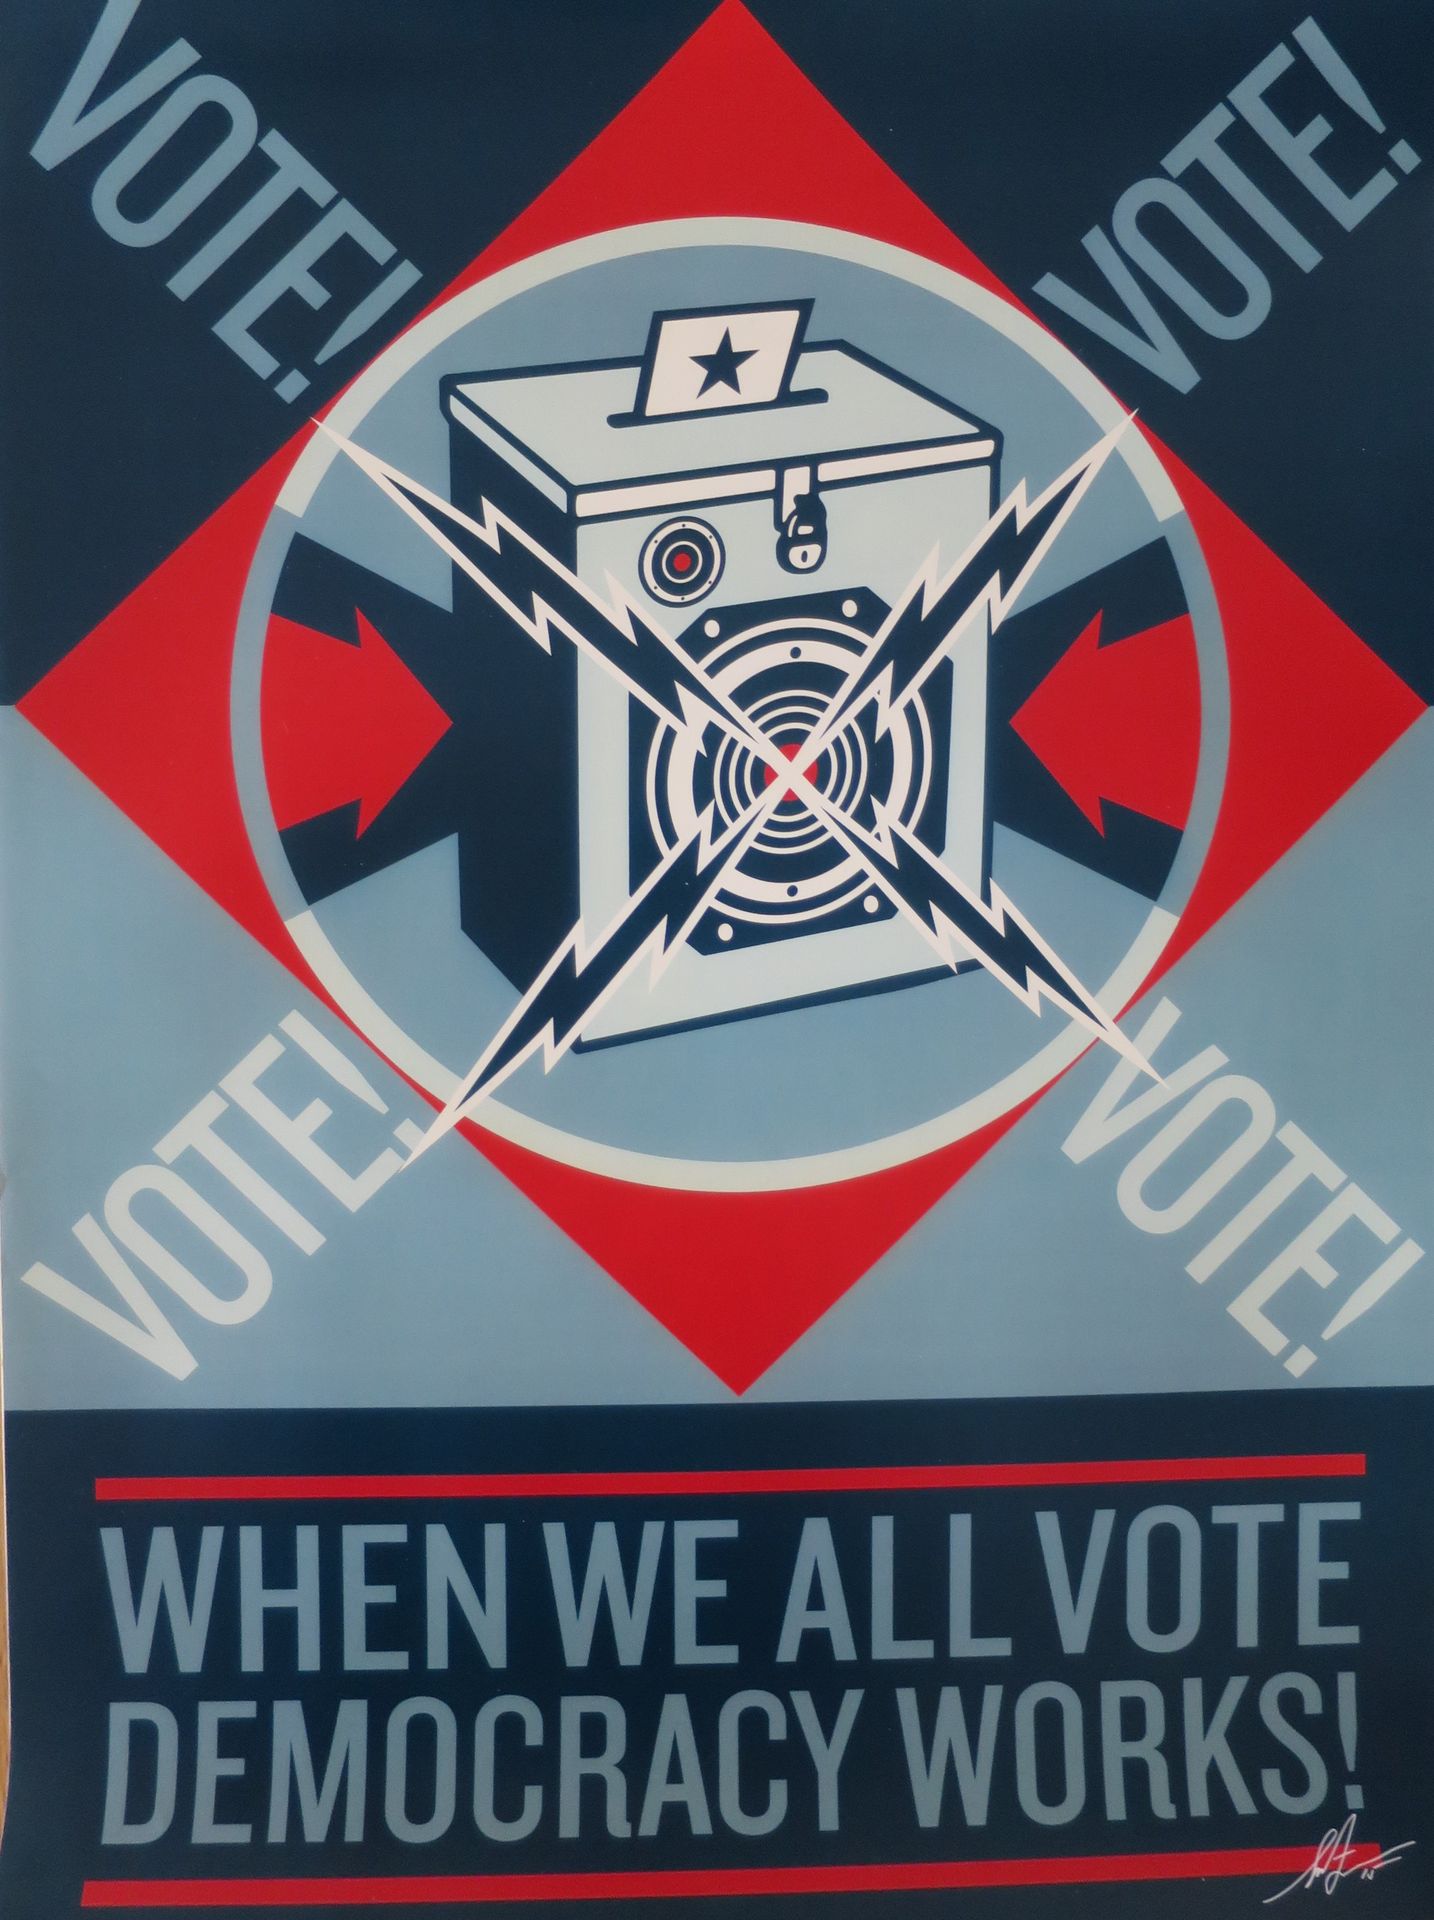 Shepard FAIREY Shepard FAIREY (Obey)

当我们都投票的时候，2020年

海报

板块中的签名

 没有编号

 

 尺寸&hellip;